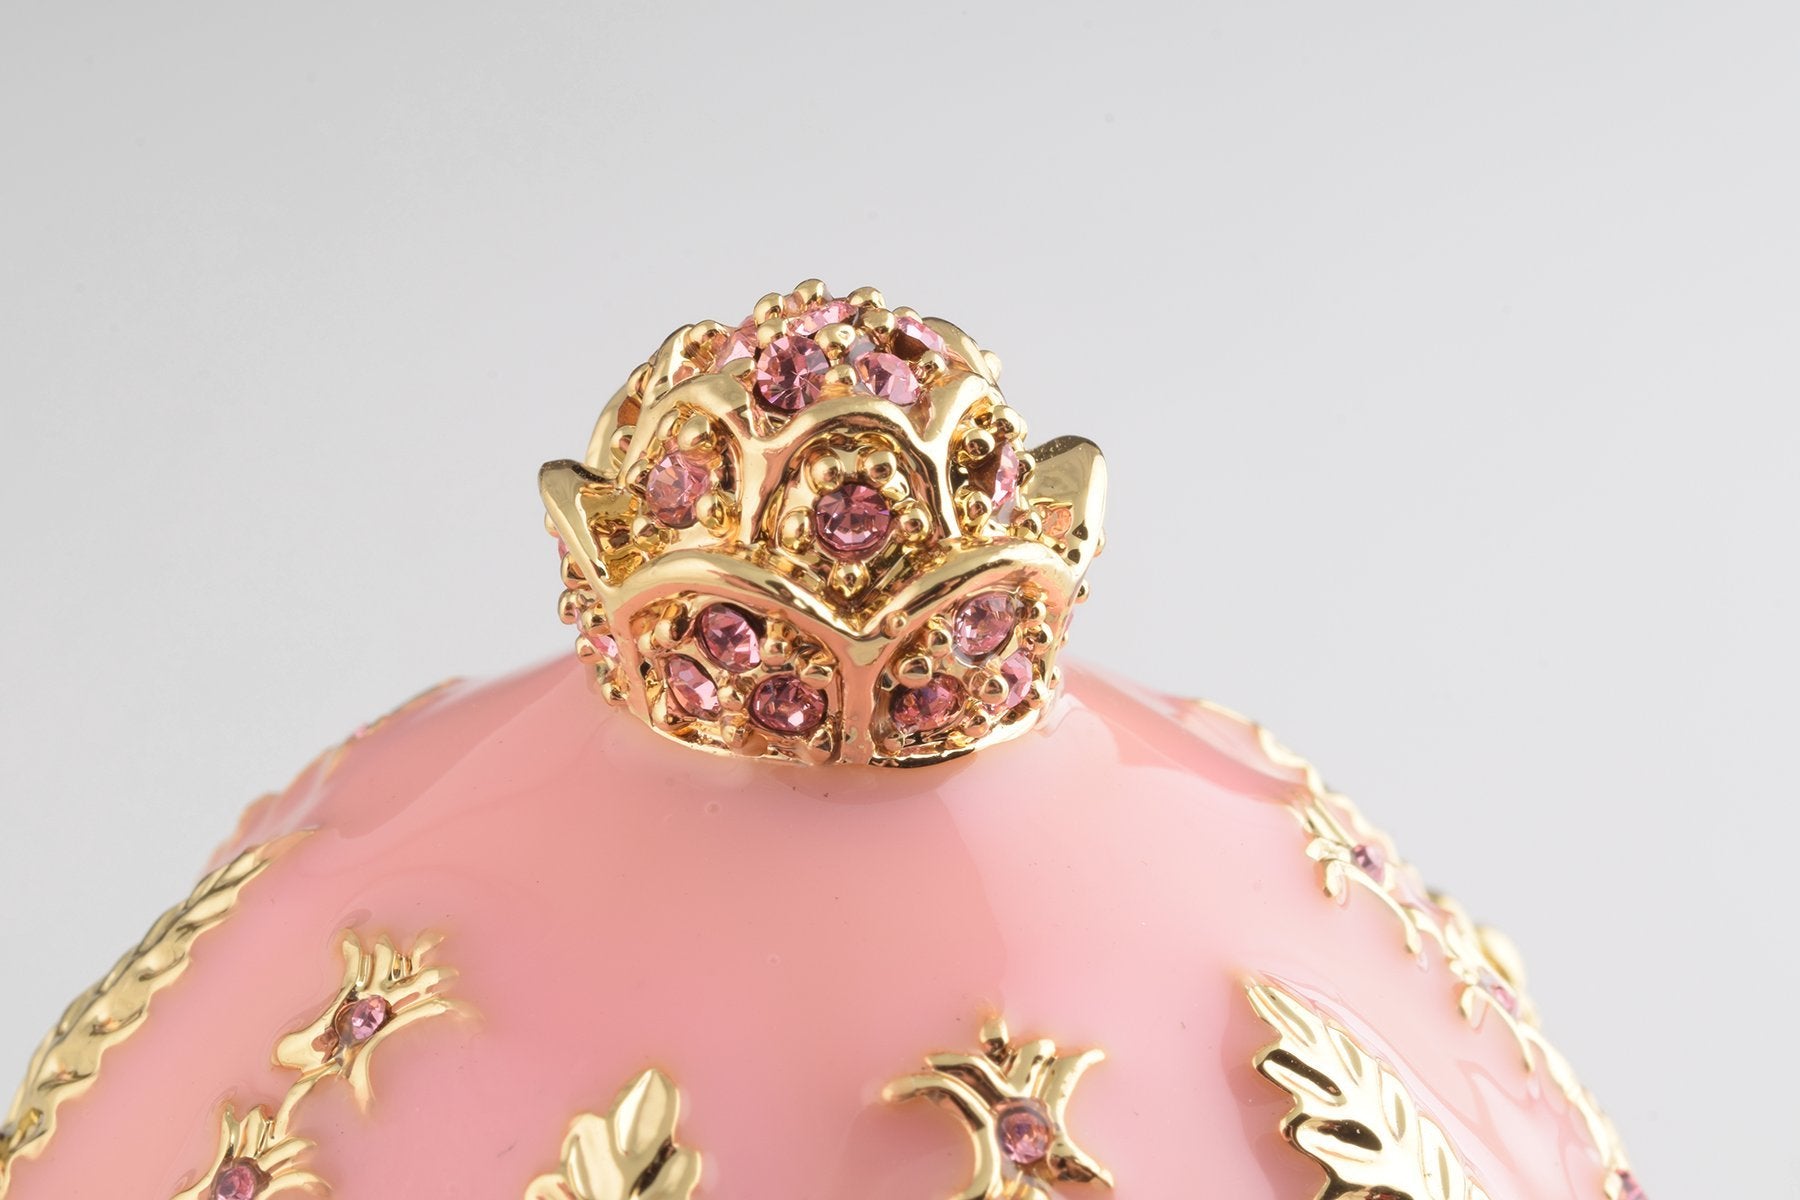 Pink Carousel Faberge Egg with White Royal Horses  Keren Kopal